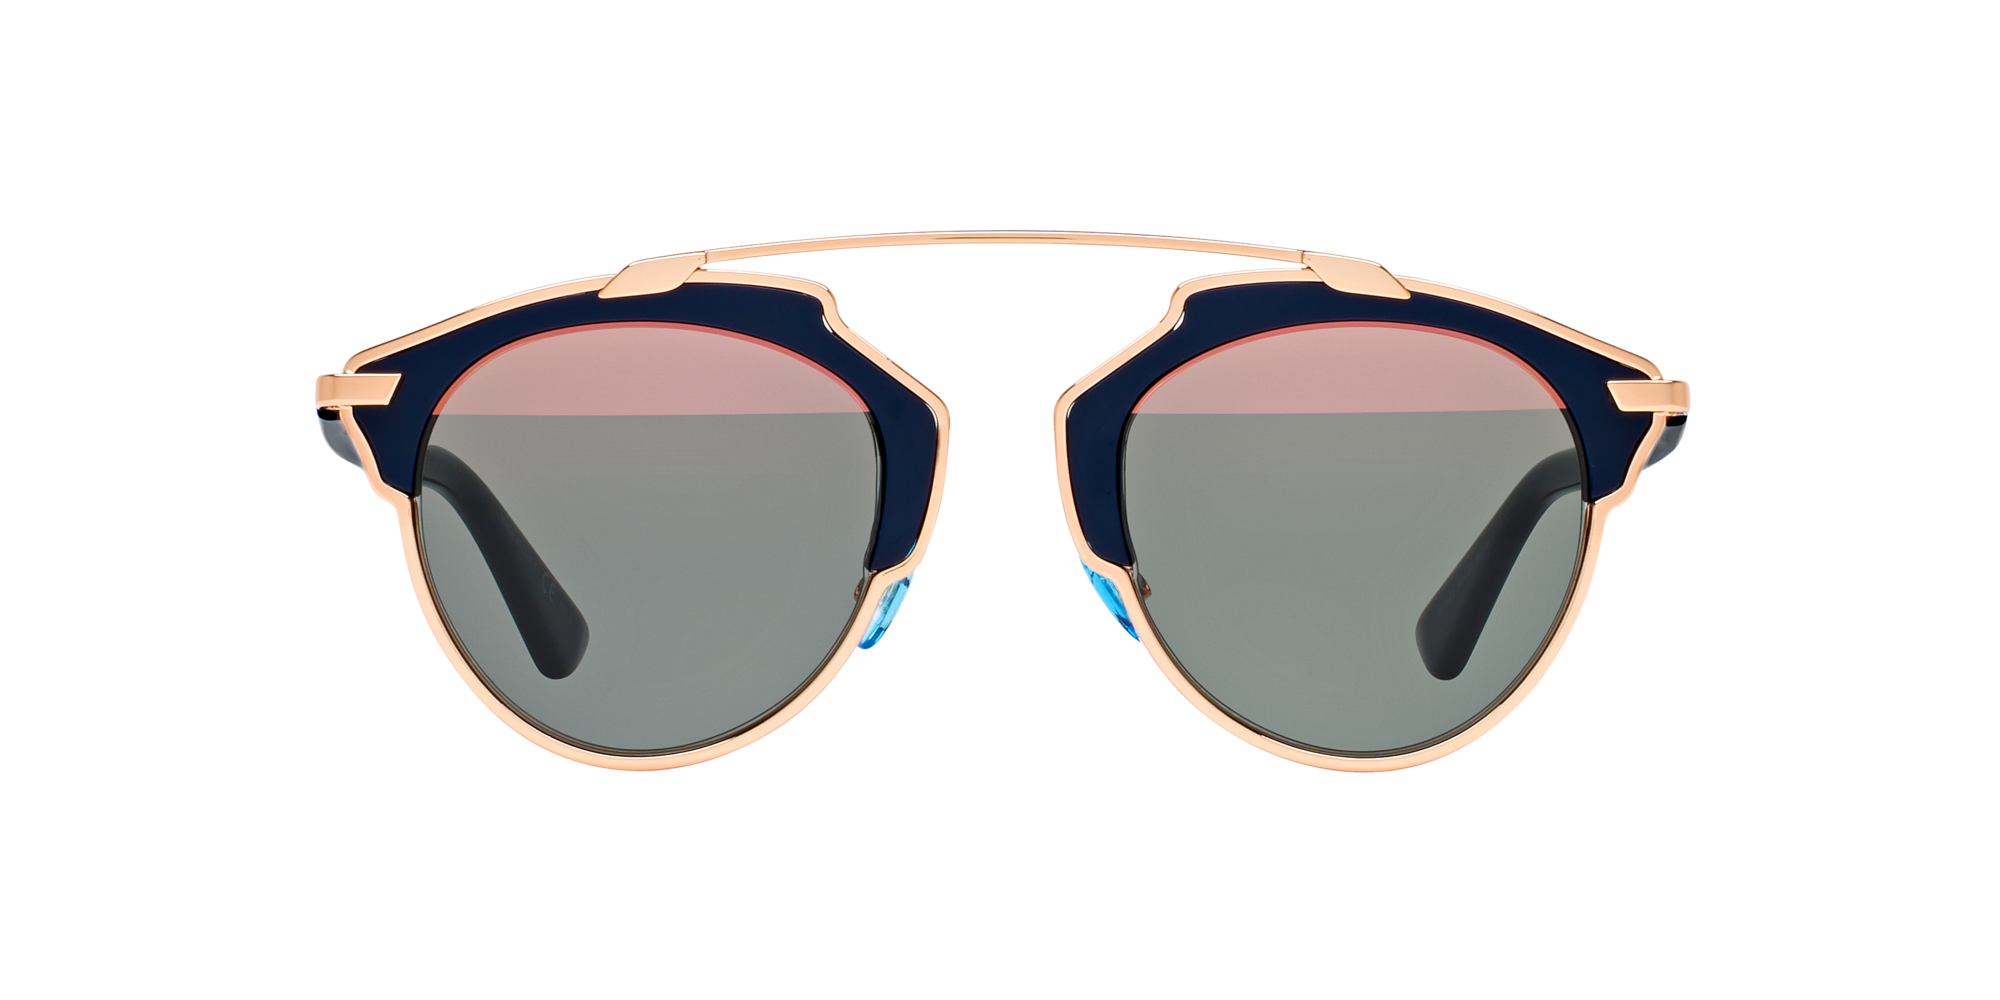 cd sunglasses, OFF 74%,Cheap price!